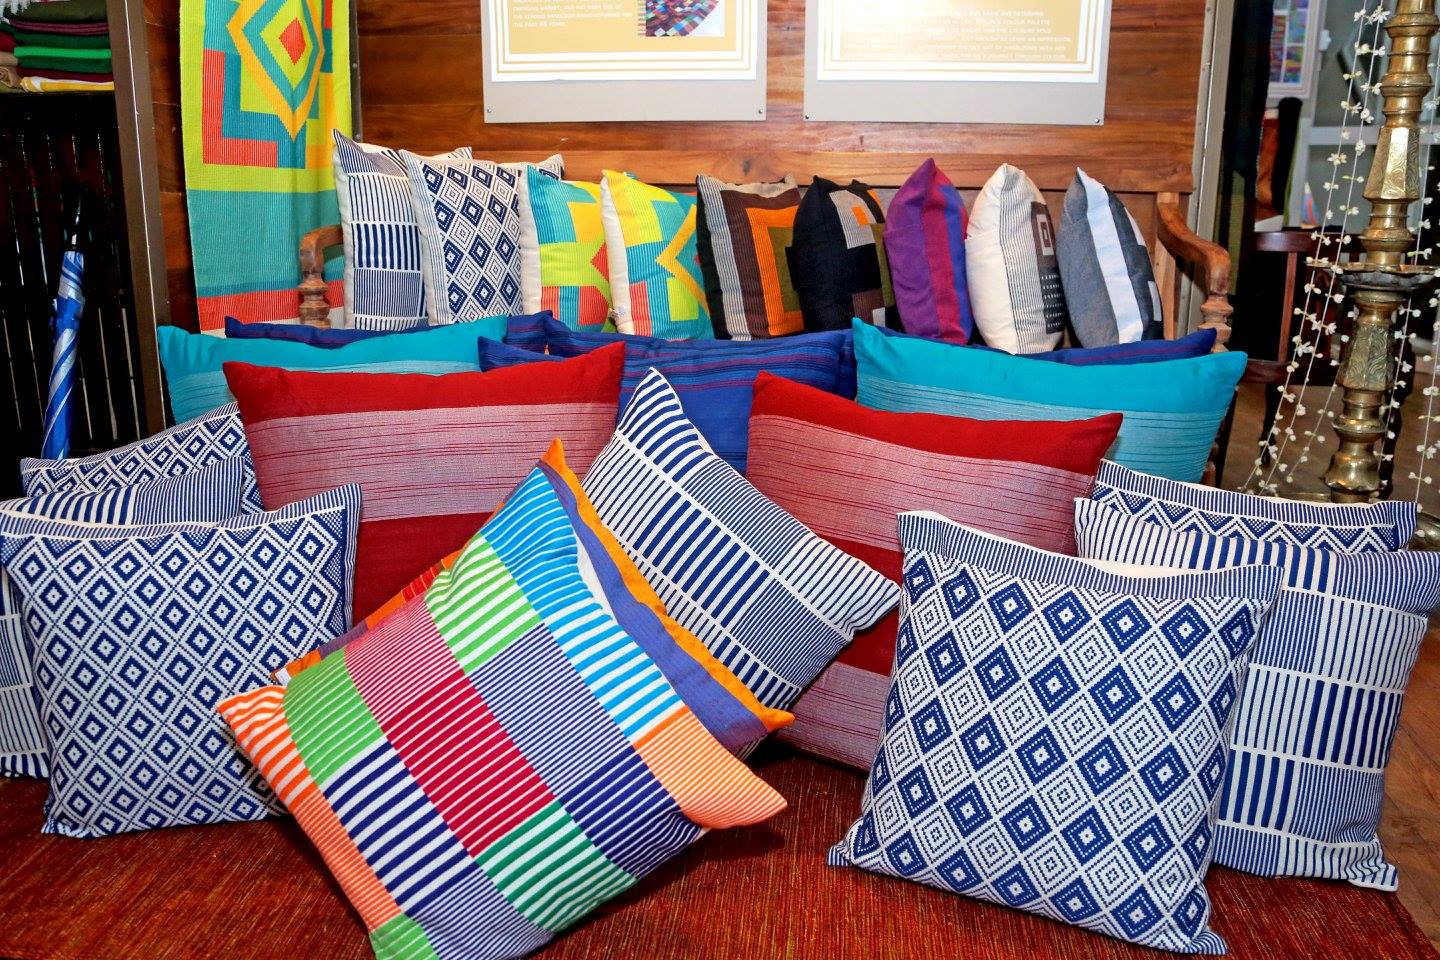 Handloom fabrics on cushions at Kandygs